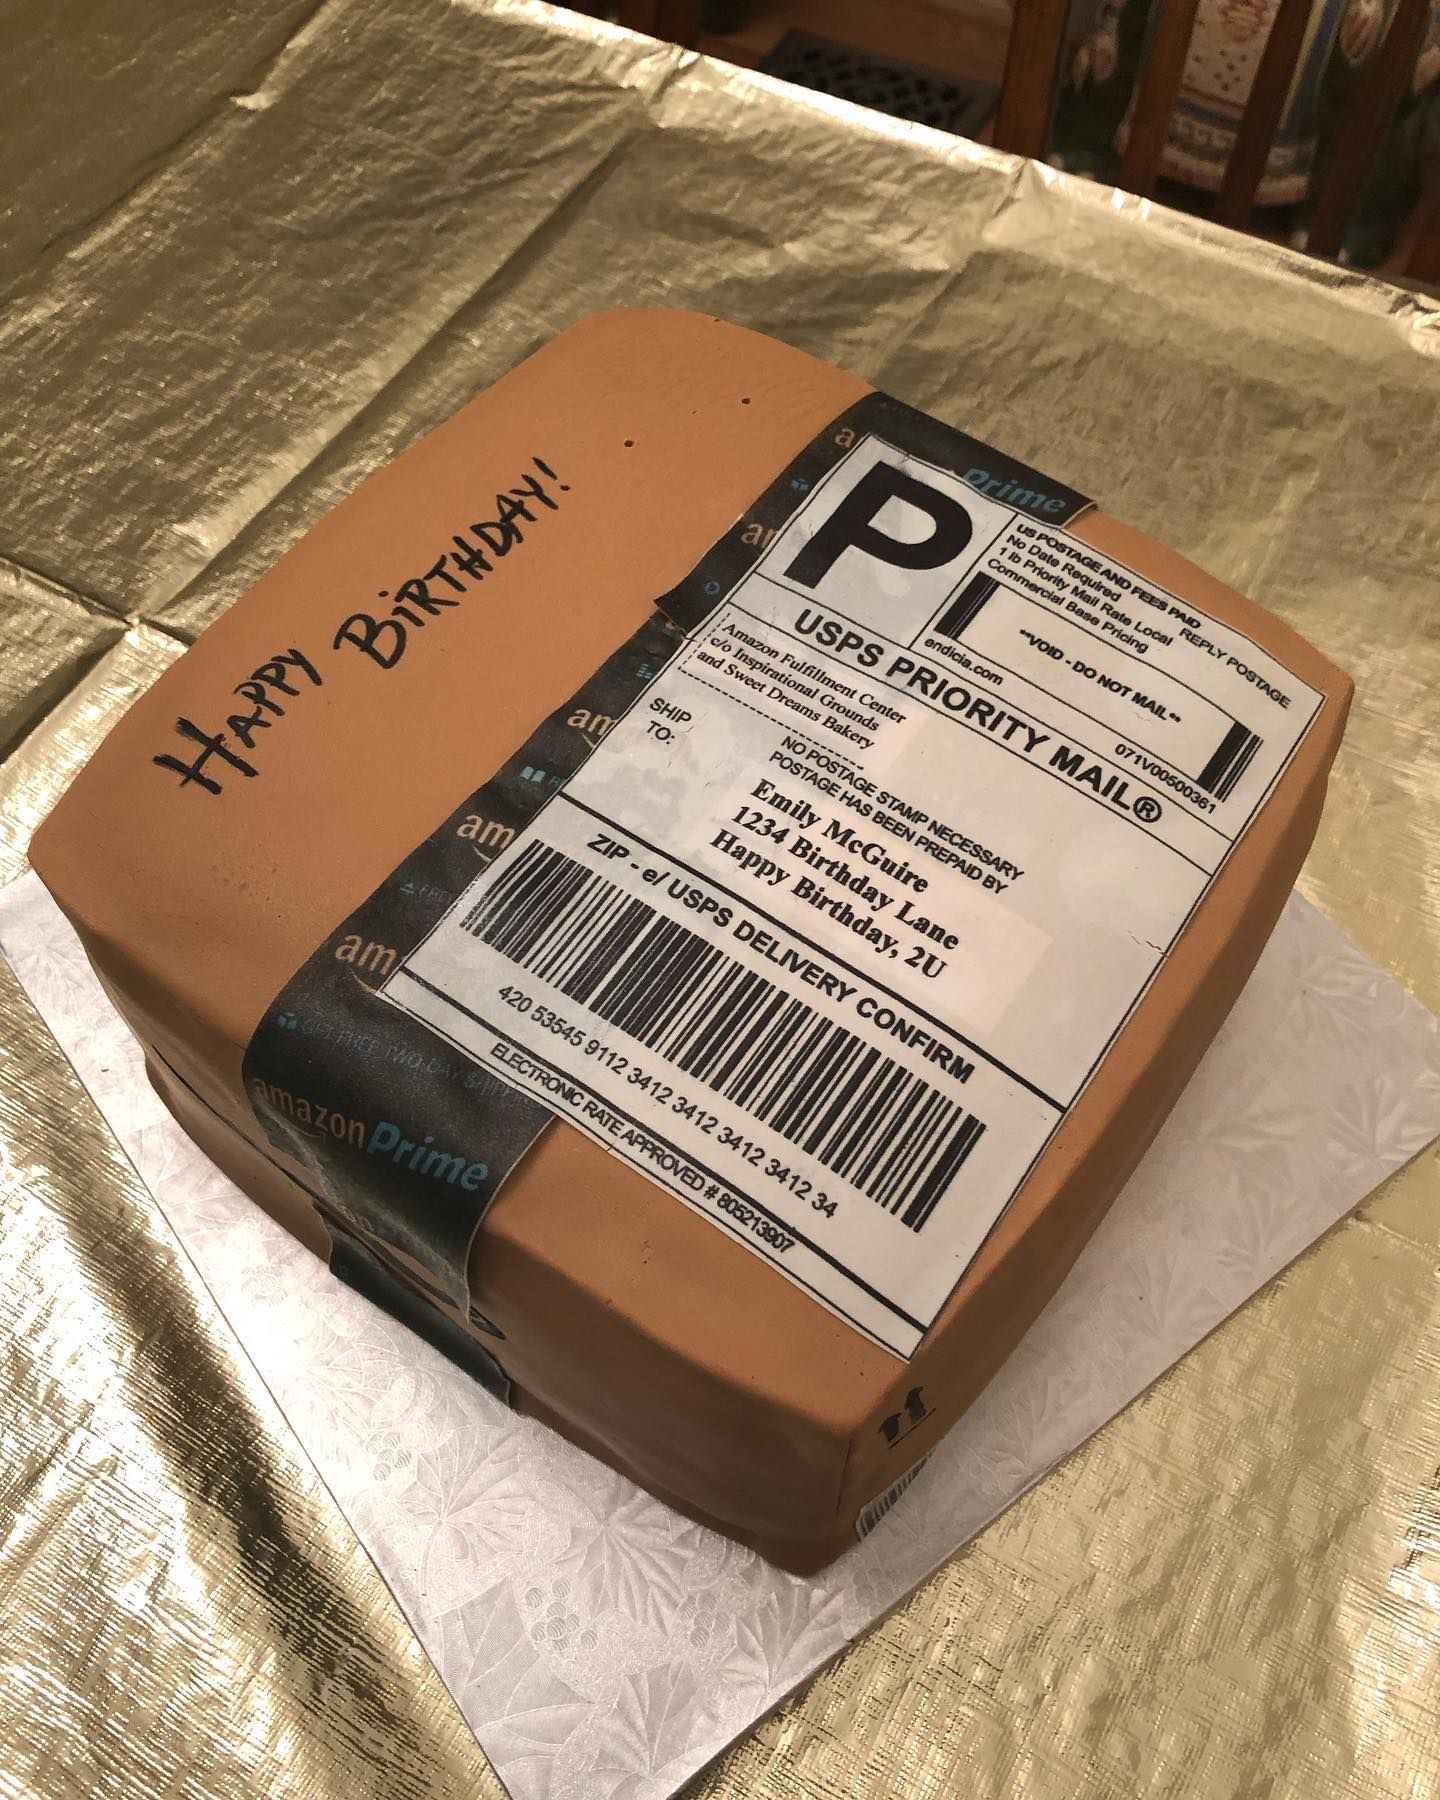 Birthday cake designed to replicate Amazon Package. : r/mildlyinteresting